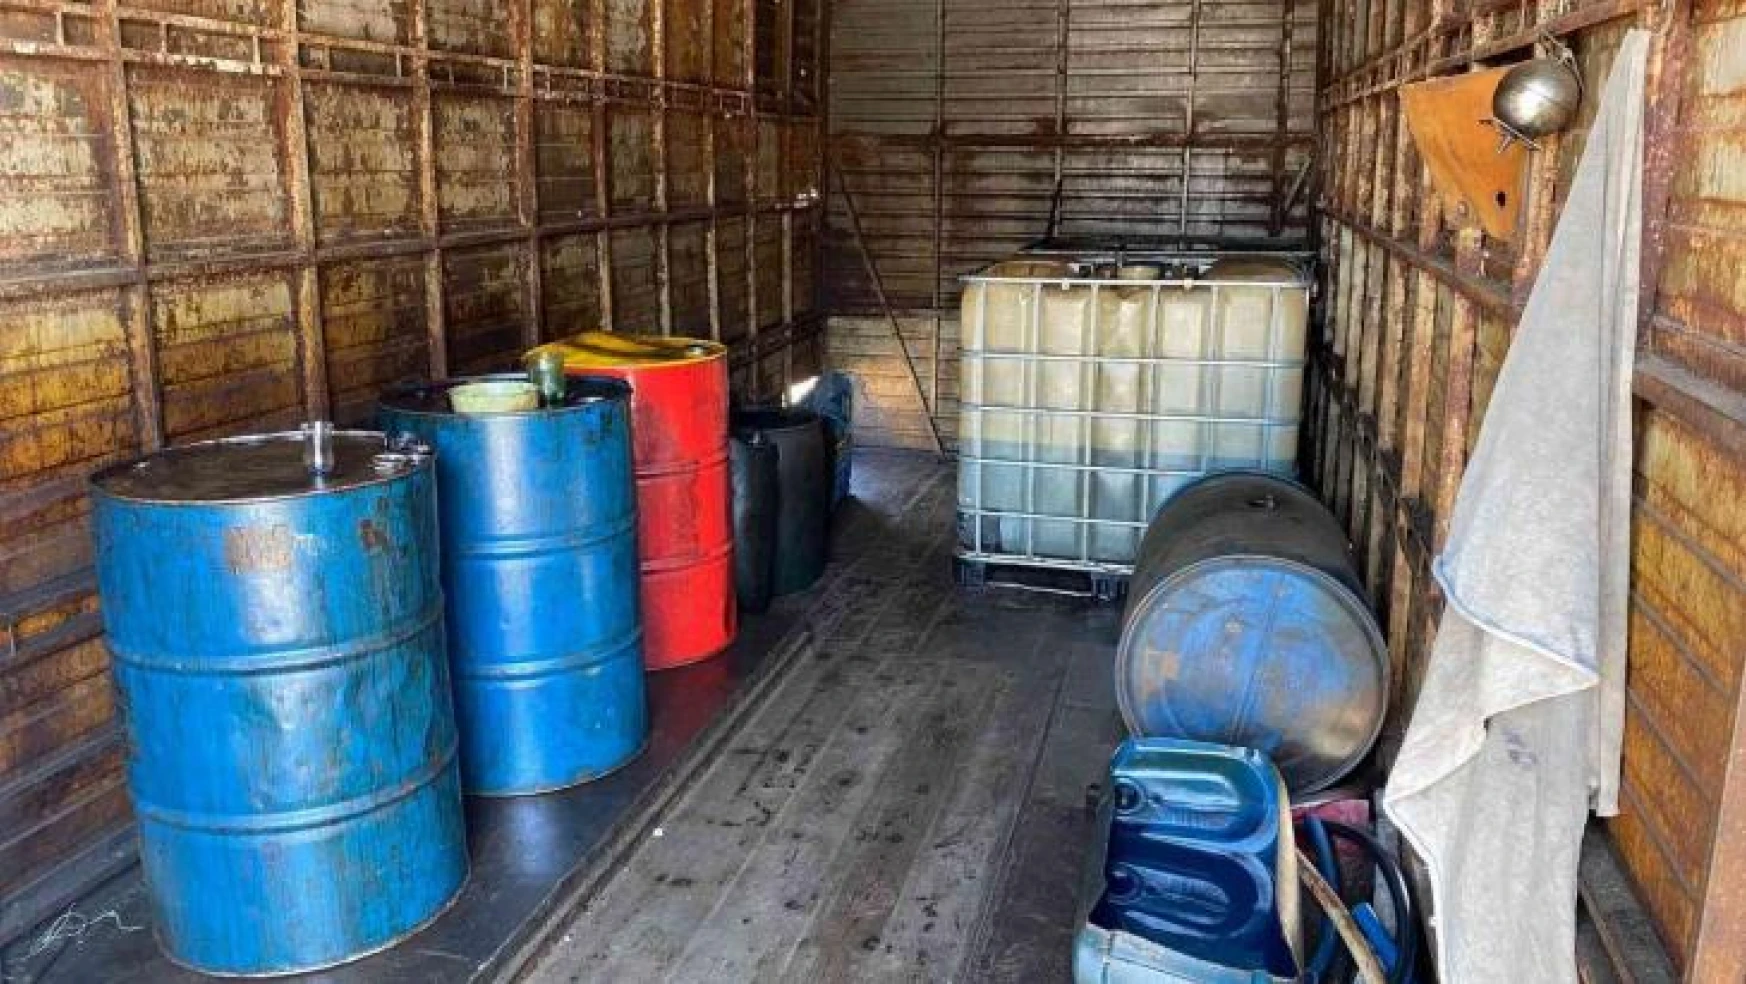 Gaziantep'te 600 litre kaçak akaryakıt ele geçirildi